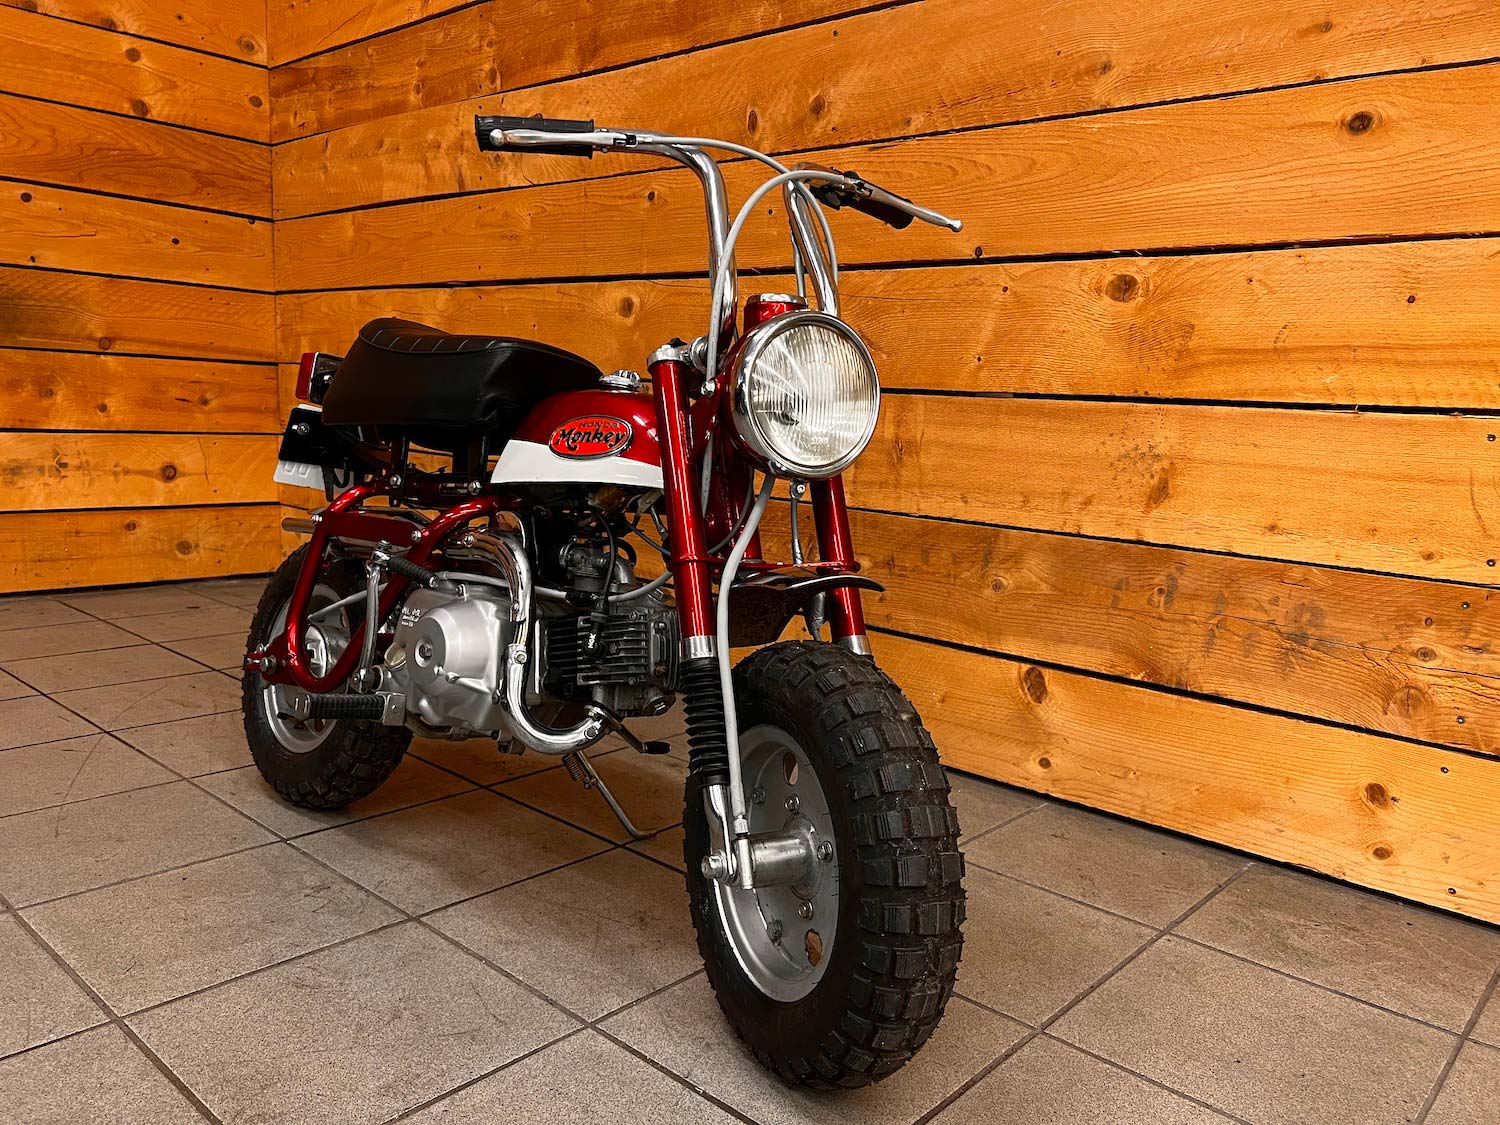 Honda_Monkey_Z50_Cezanne_classic_motorcycle_4-163.jpg